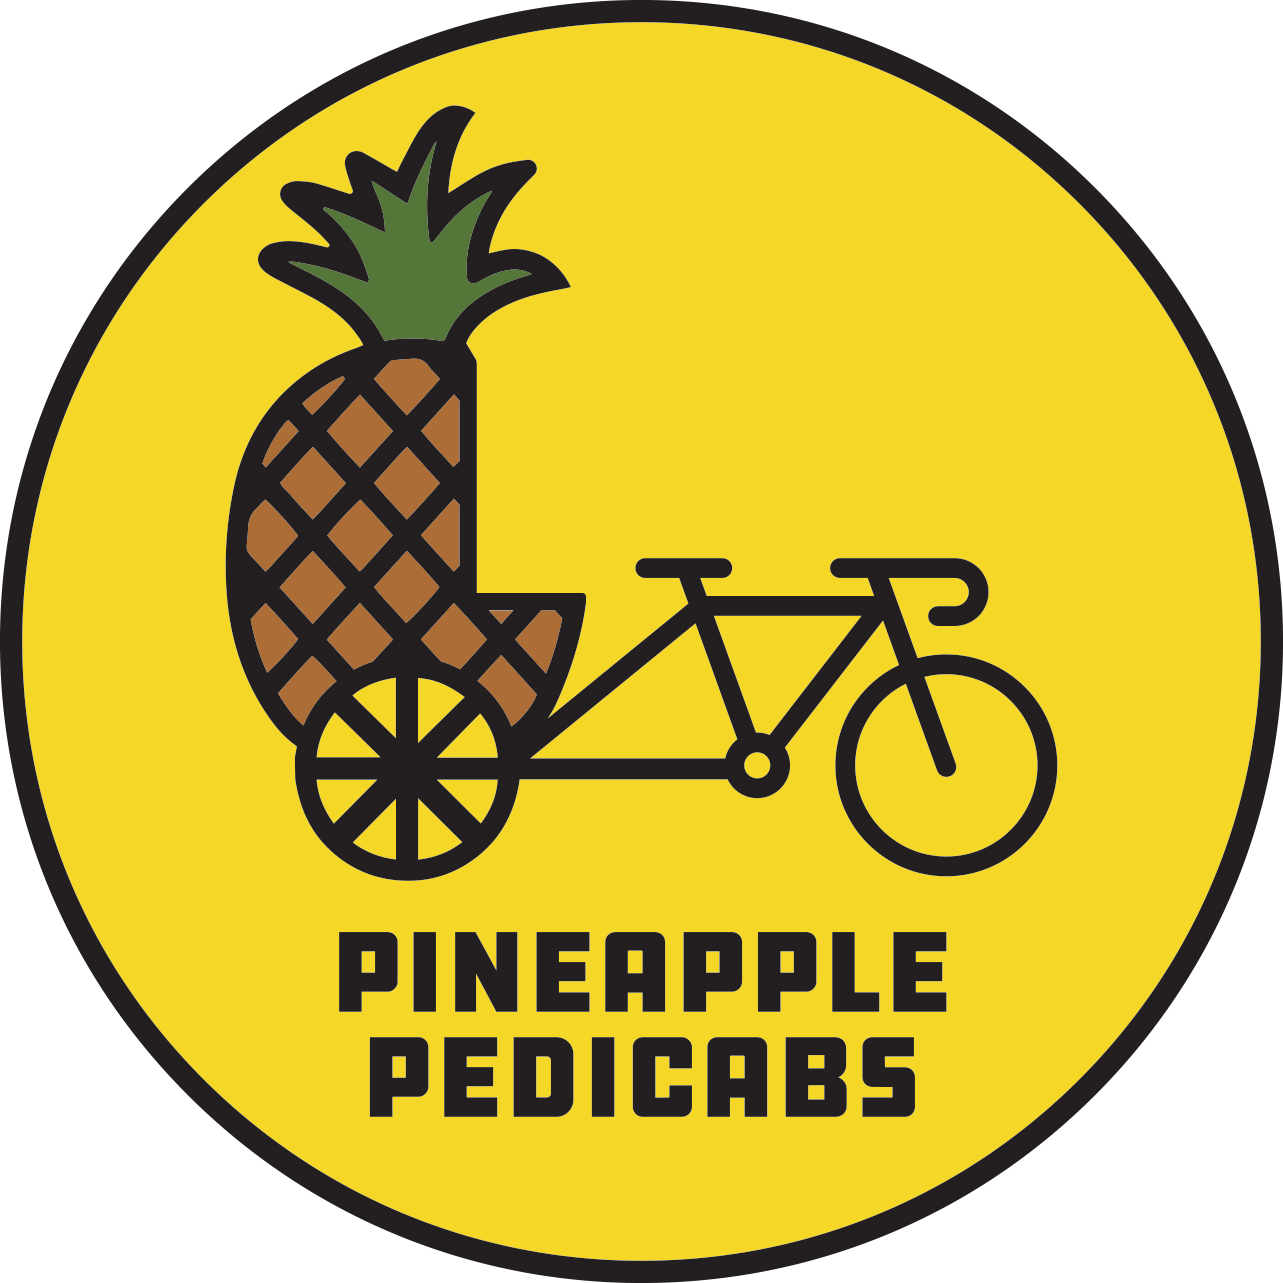 Pineapple Pedicabs